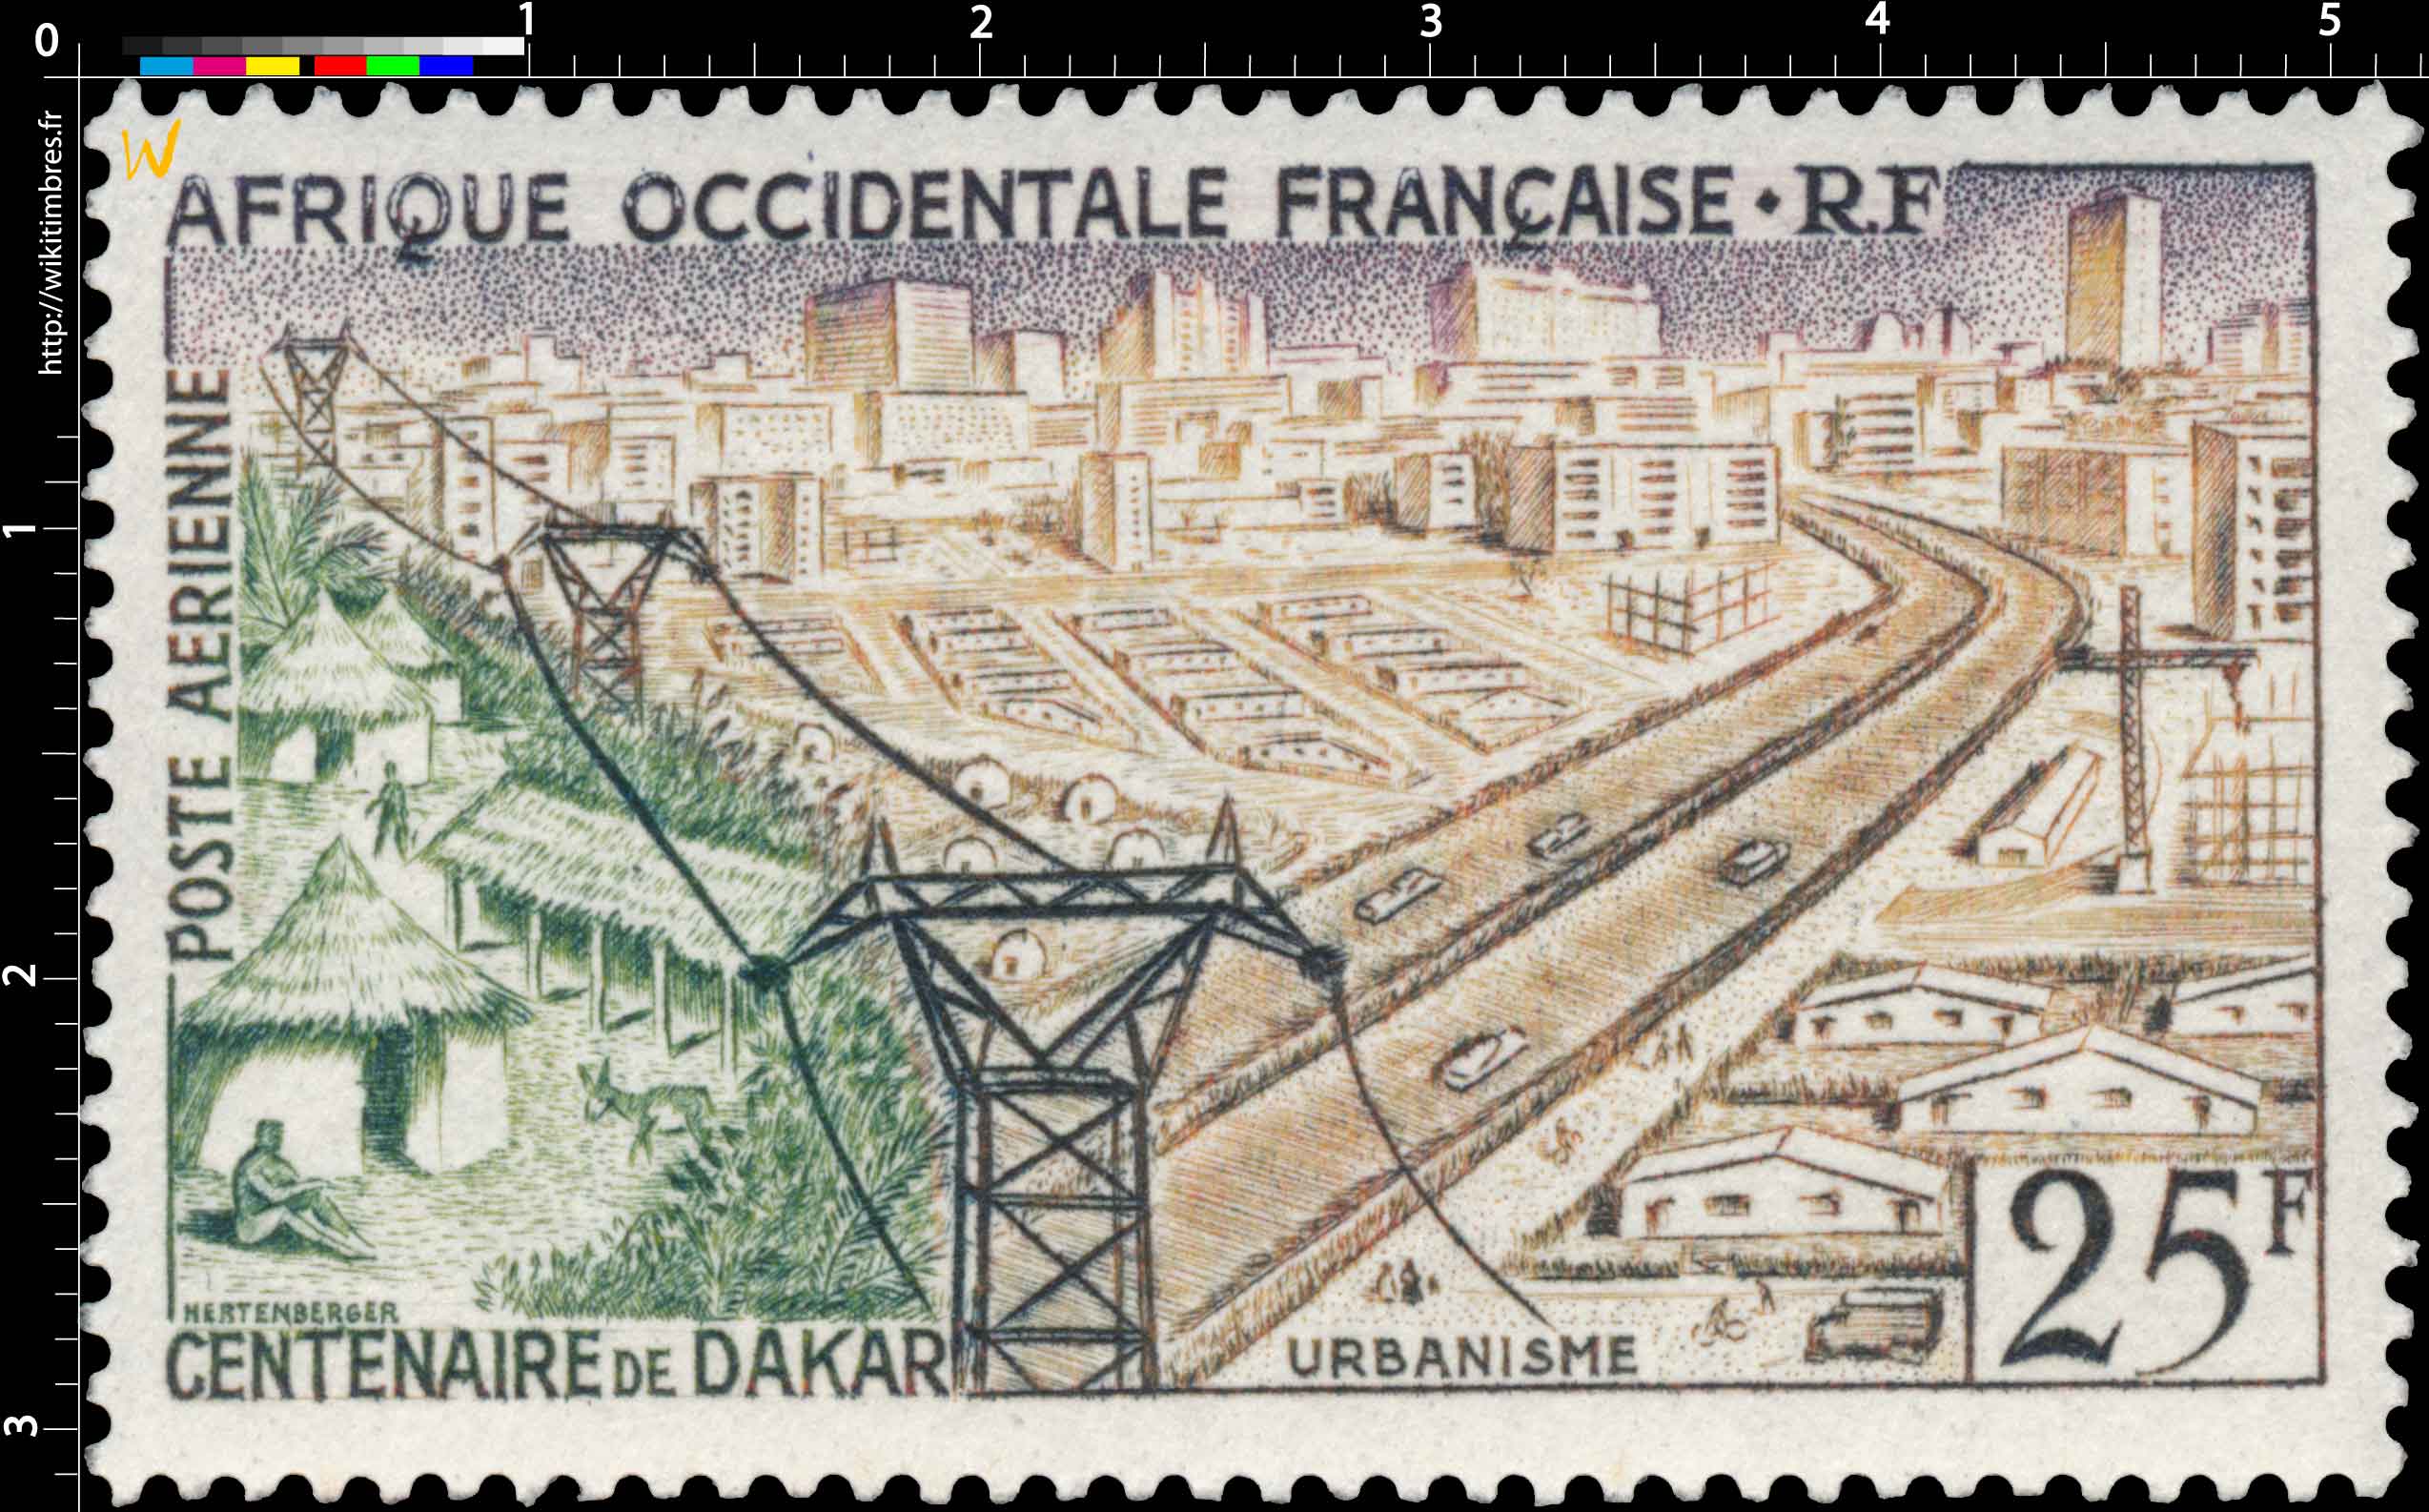 Afrique Occidentale Française - Centenaire de Dakar, urbanisme